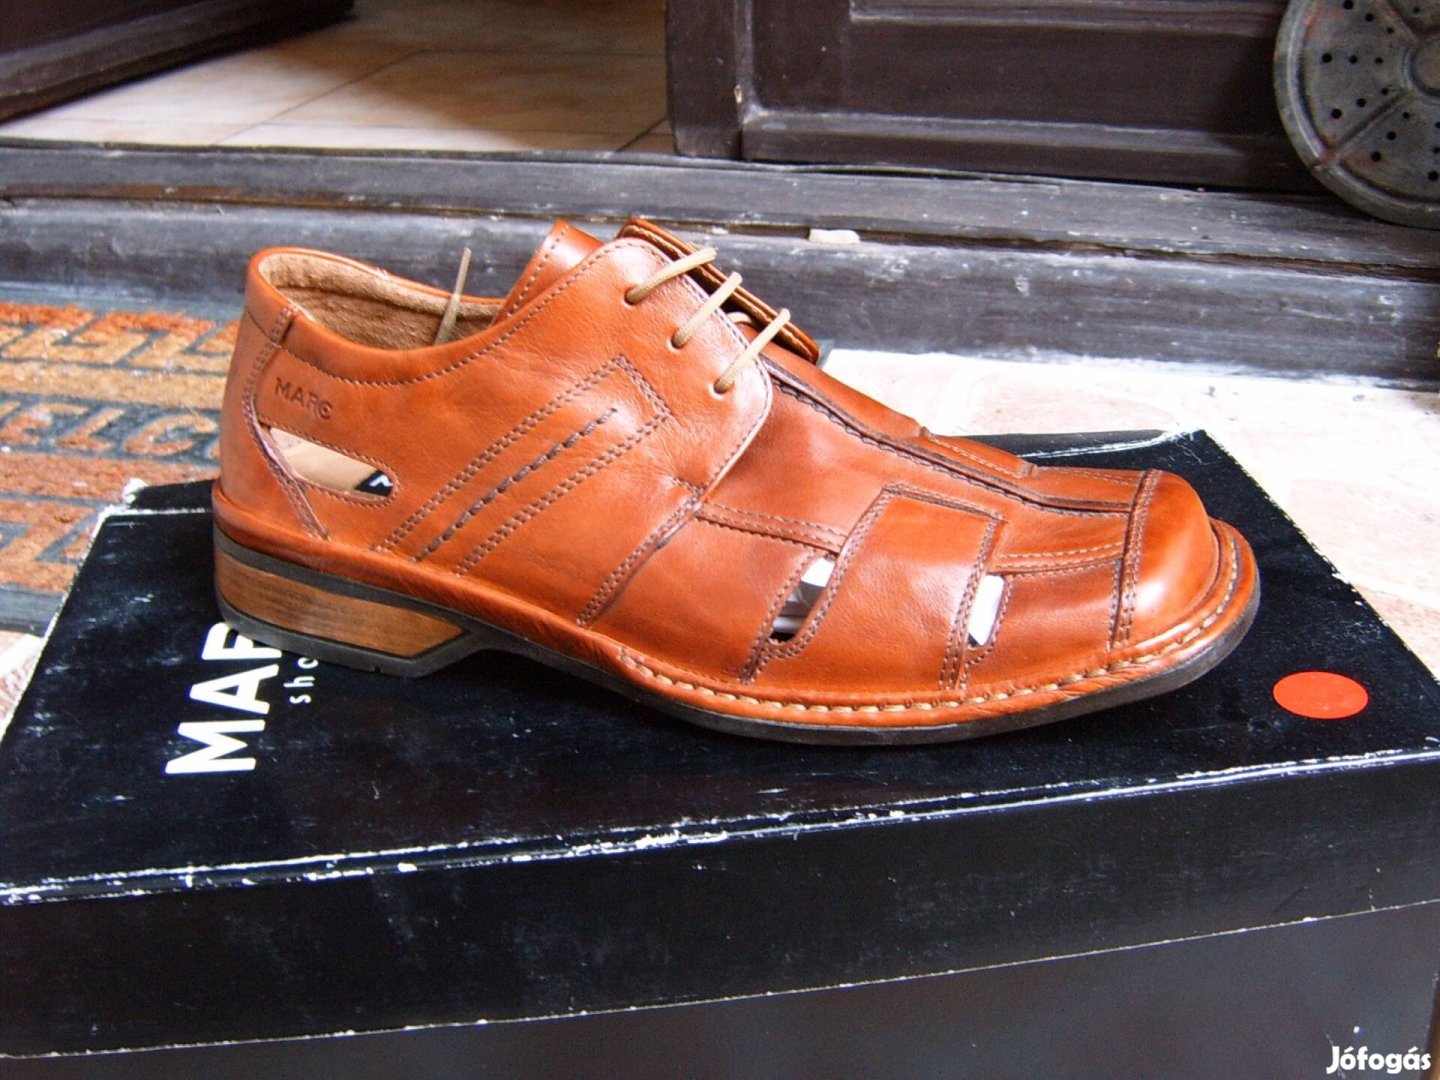 Új Marc valódi bőr cipő prémium